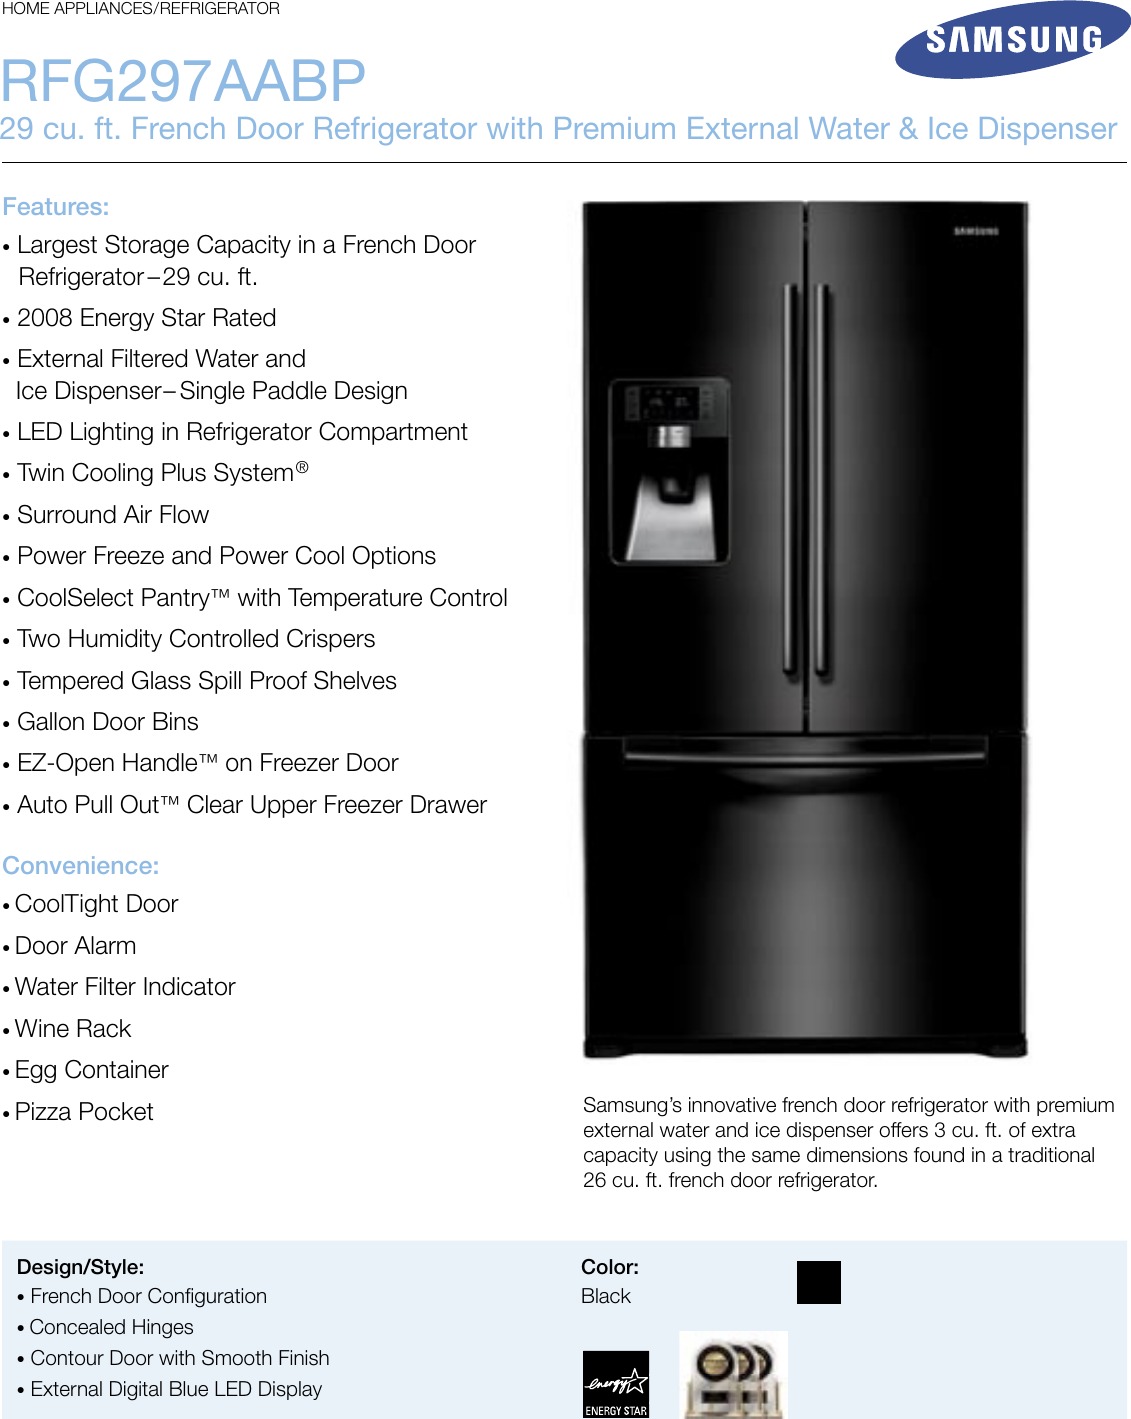 Samsung refrigerator french door troubleshooting